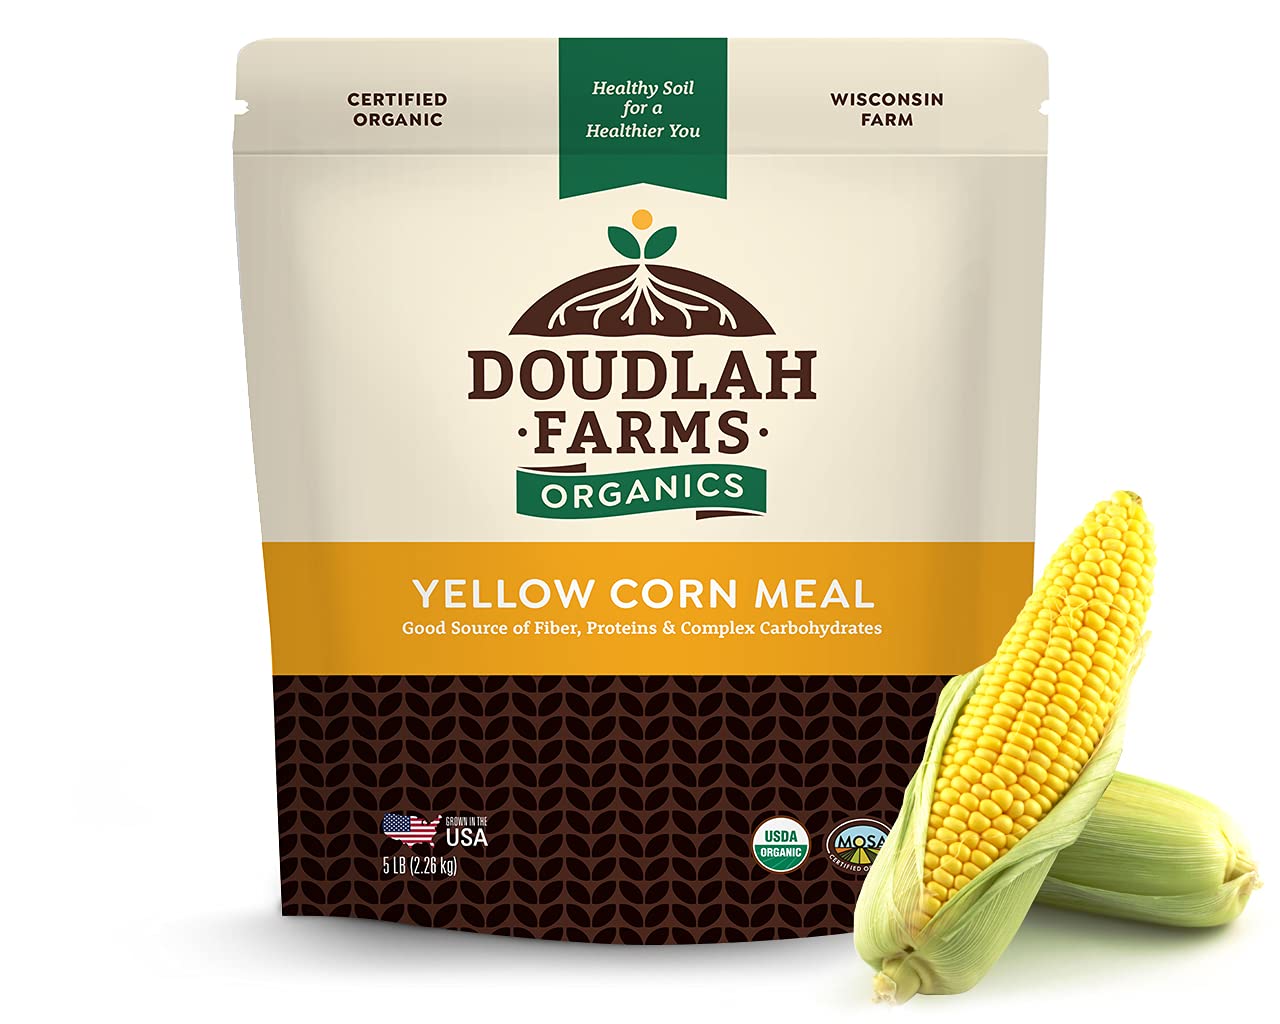 Doudlah Farms Organic Yellow cornmeal 5lb by Doudlah Farms - Farmed From Regenerative Soil Vegan Non-gMO grown In USA For Baking cornbread Muf